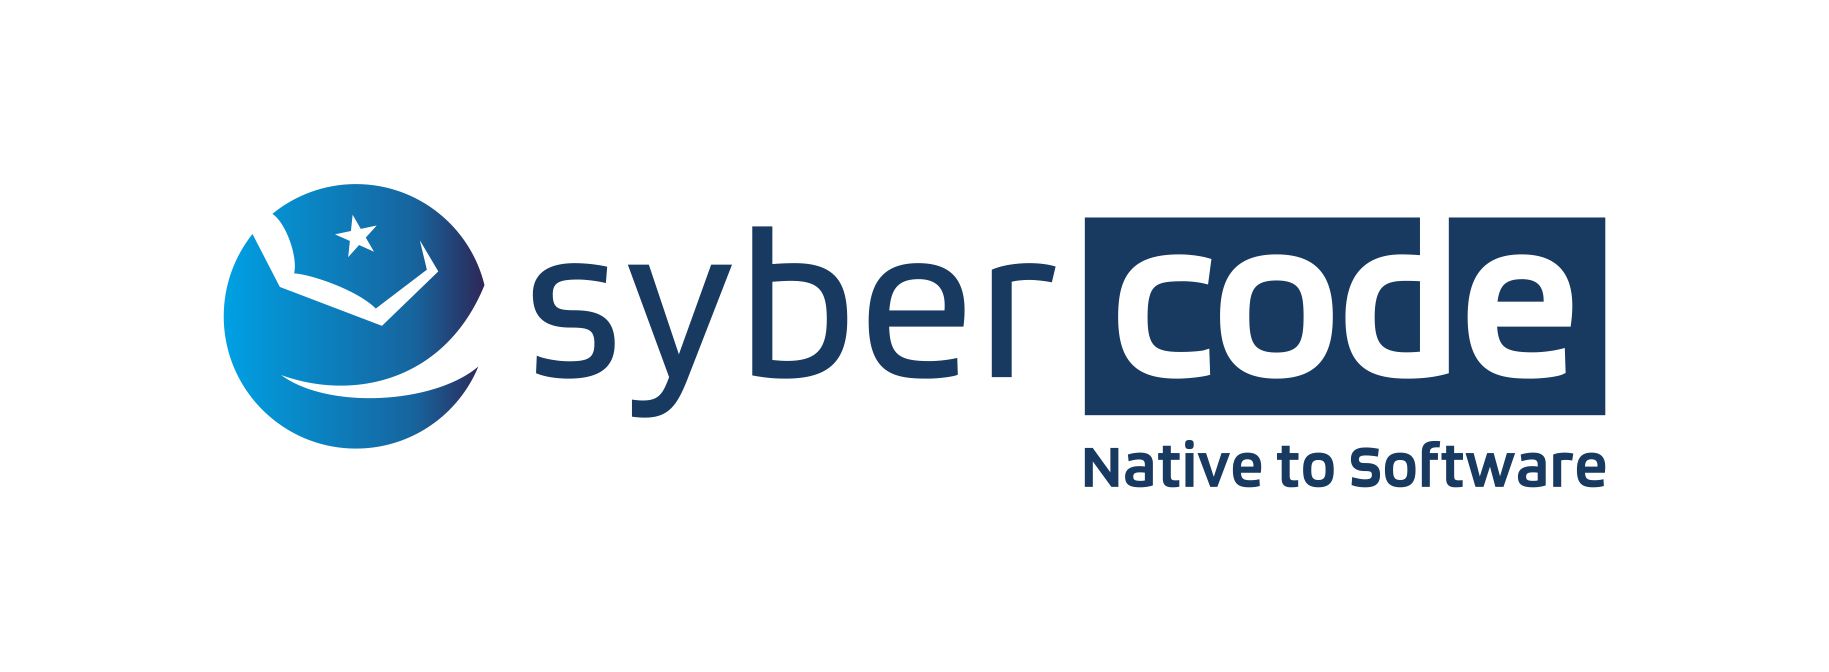 sybercode